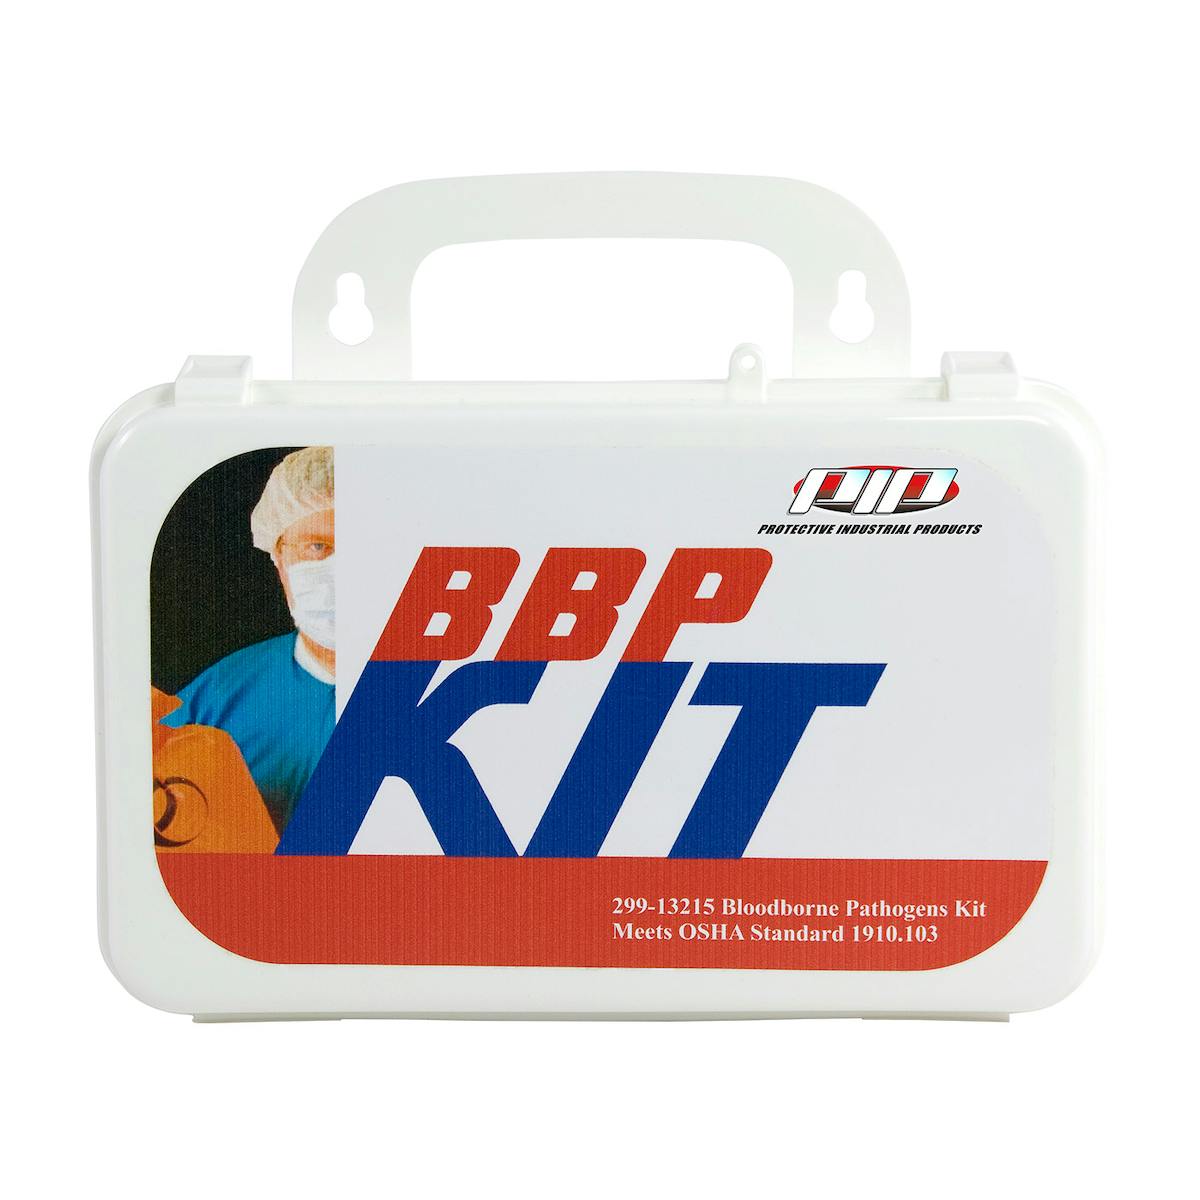 Bloodborne Pathogens Kit, White (299-13215) - KIT